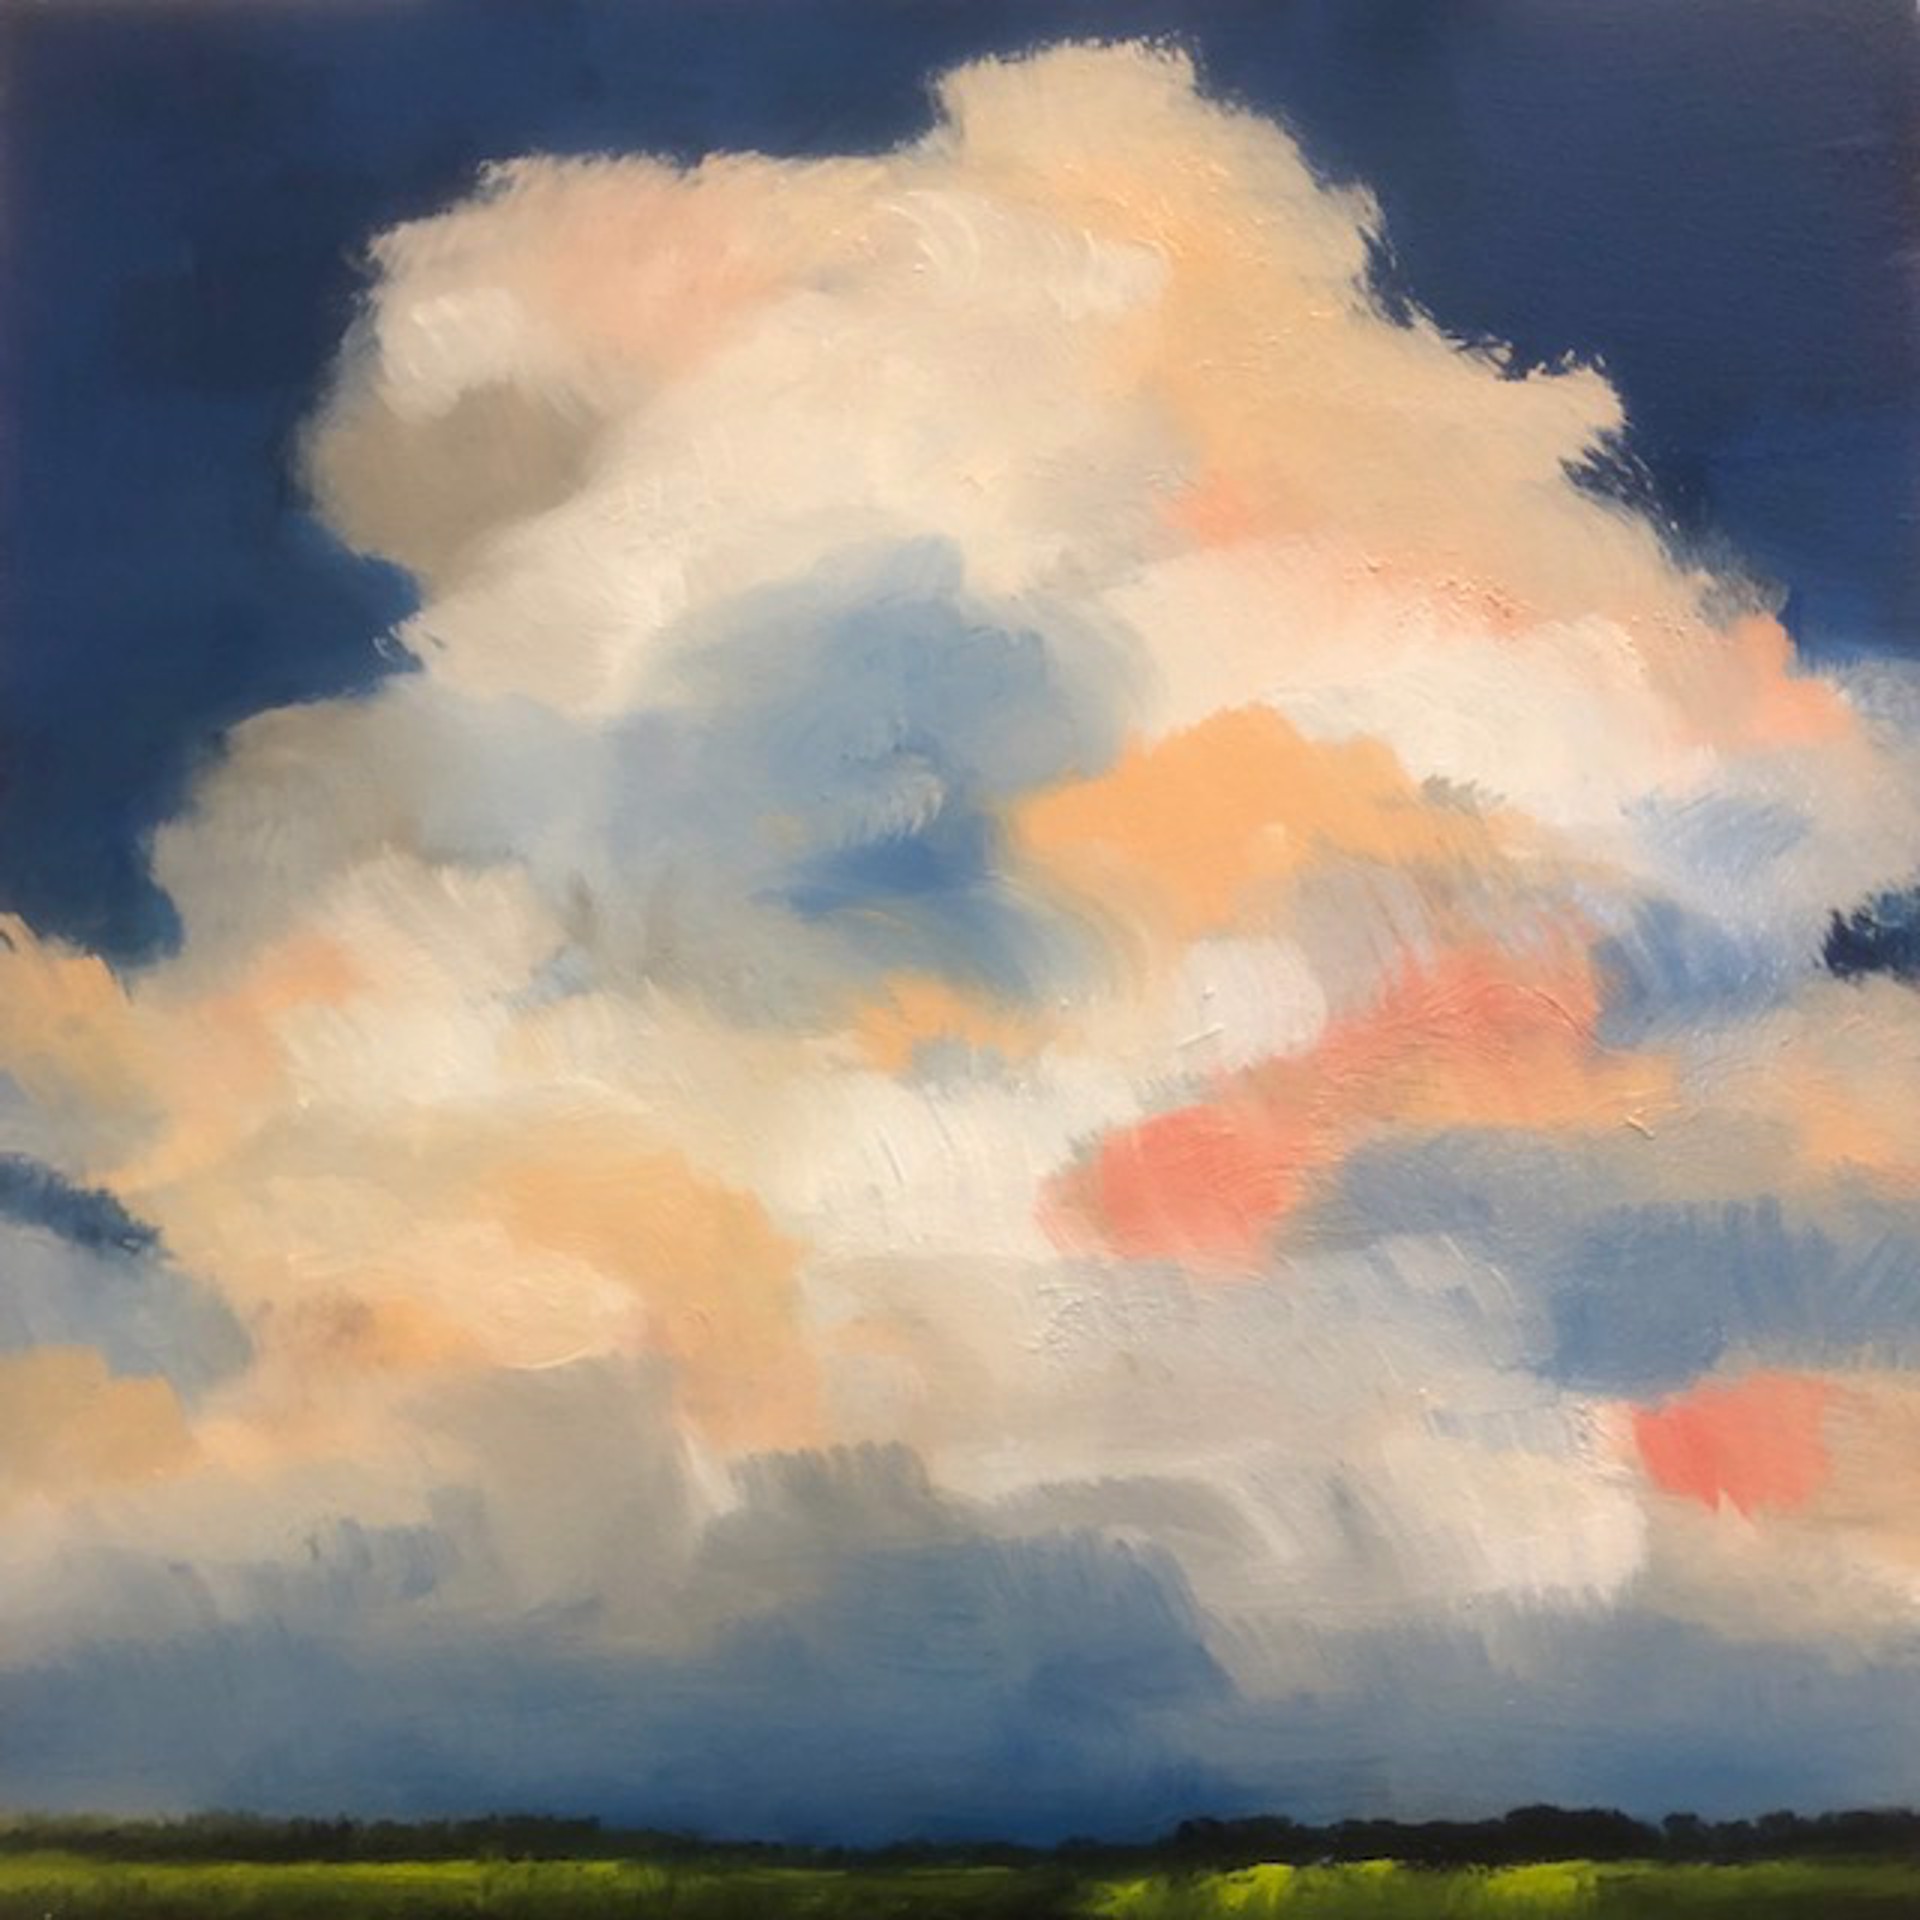 Summer Storm (Cumulus Congestus) by Paula Wallace